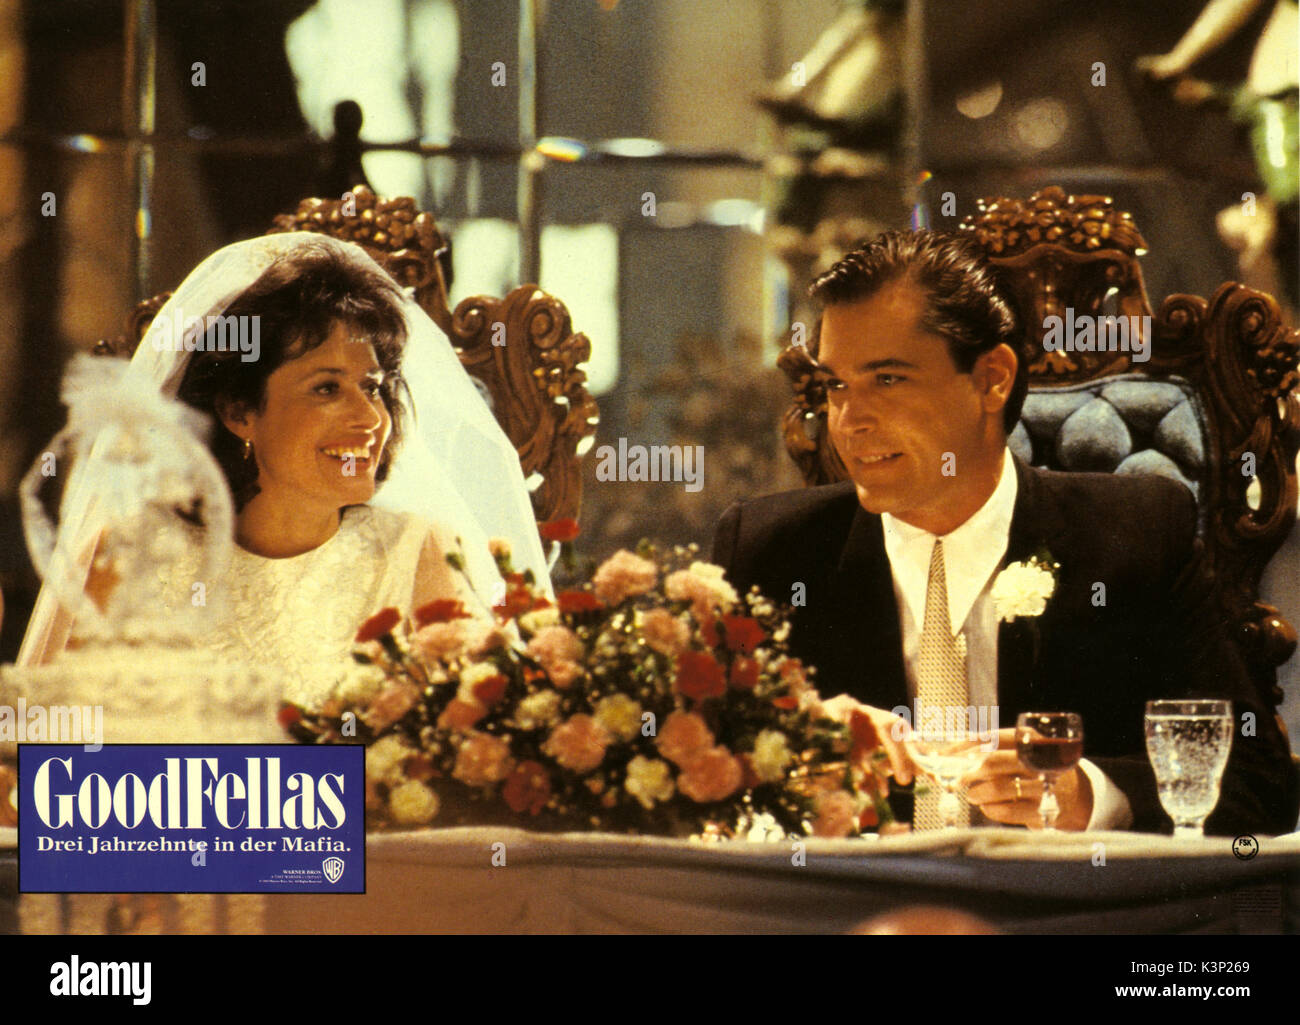 GOODFELLAS [US 1993] LORRAINE BRACCO, RAY LIOTTA as Henry Hill     Date: 1993 Stock Photo